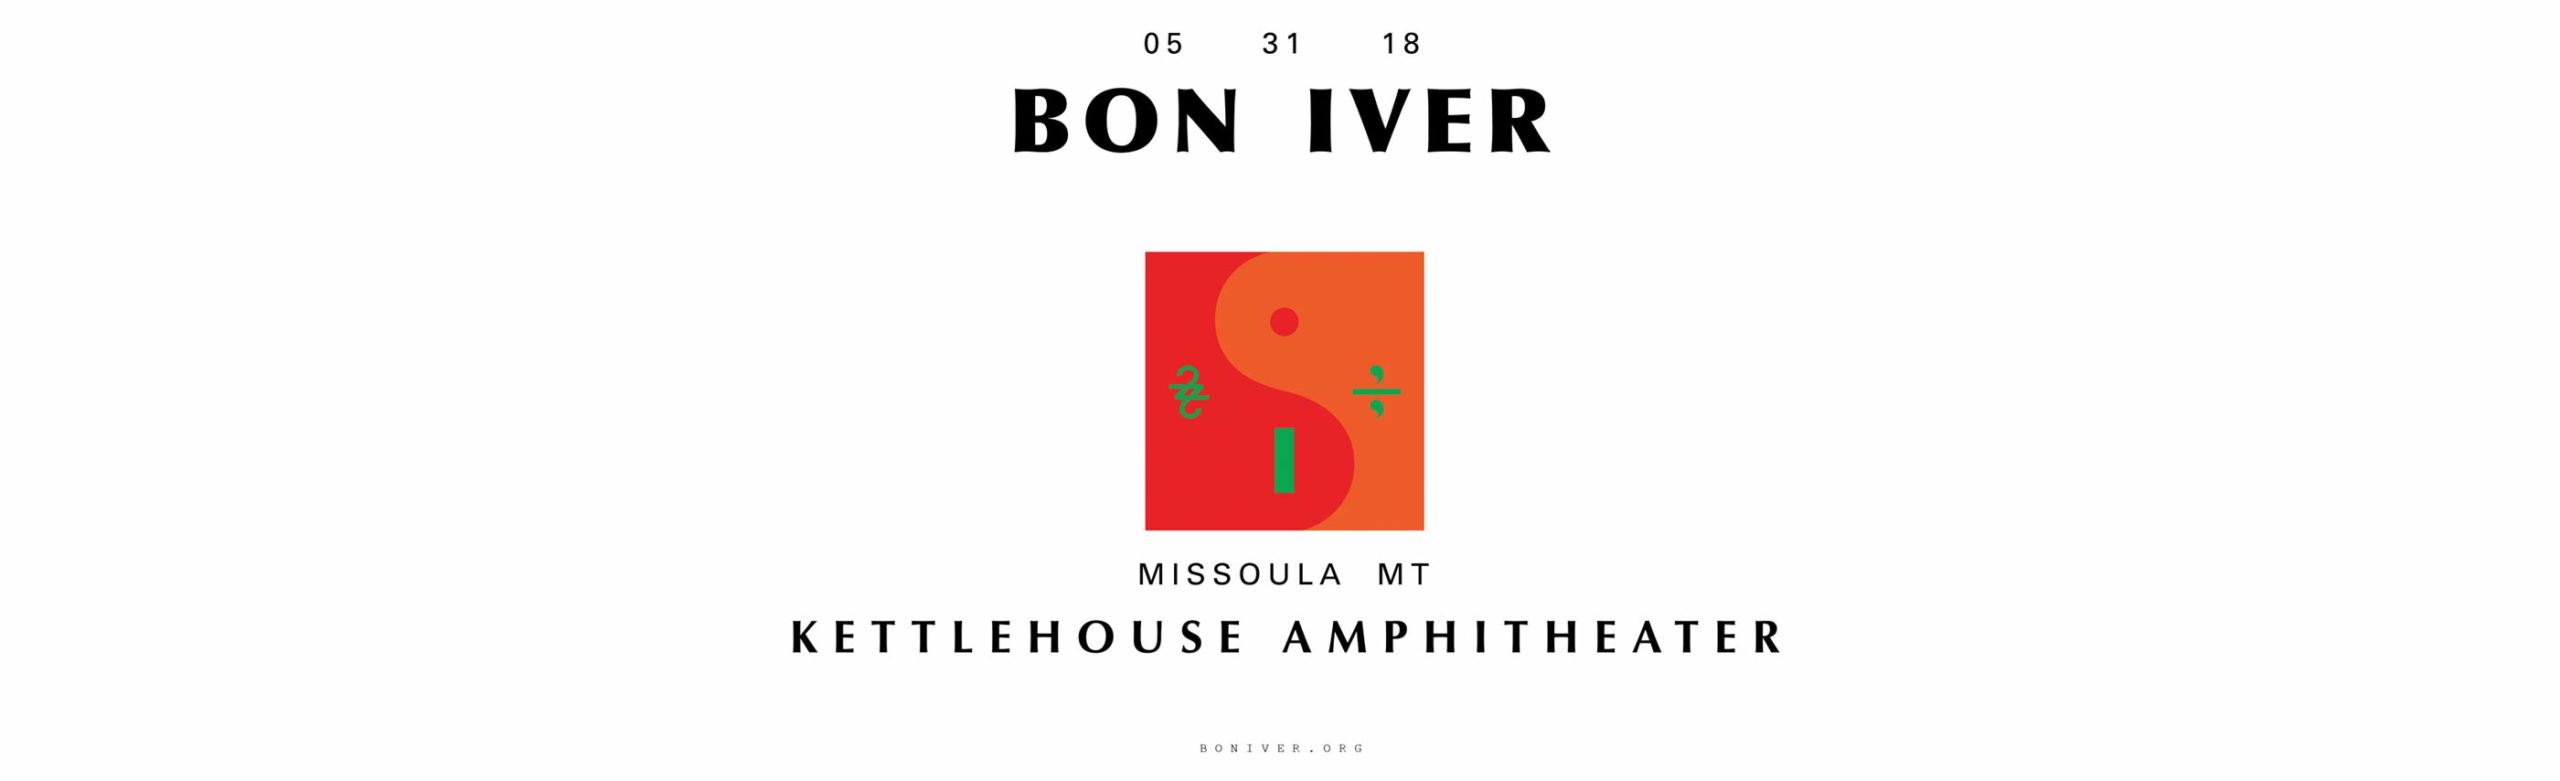 Event Info: Bon Iver at KettleHouse Amphitheater 2018 Image